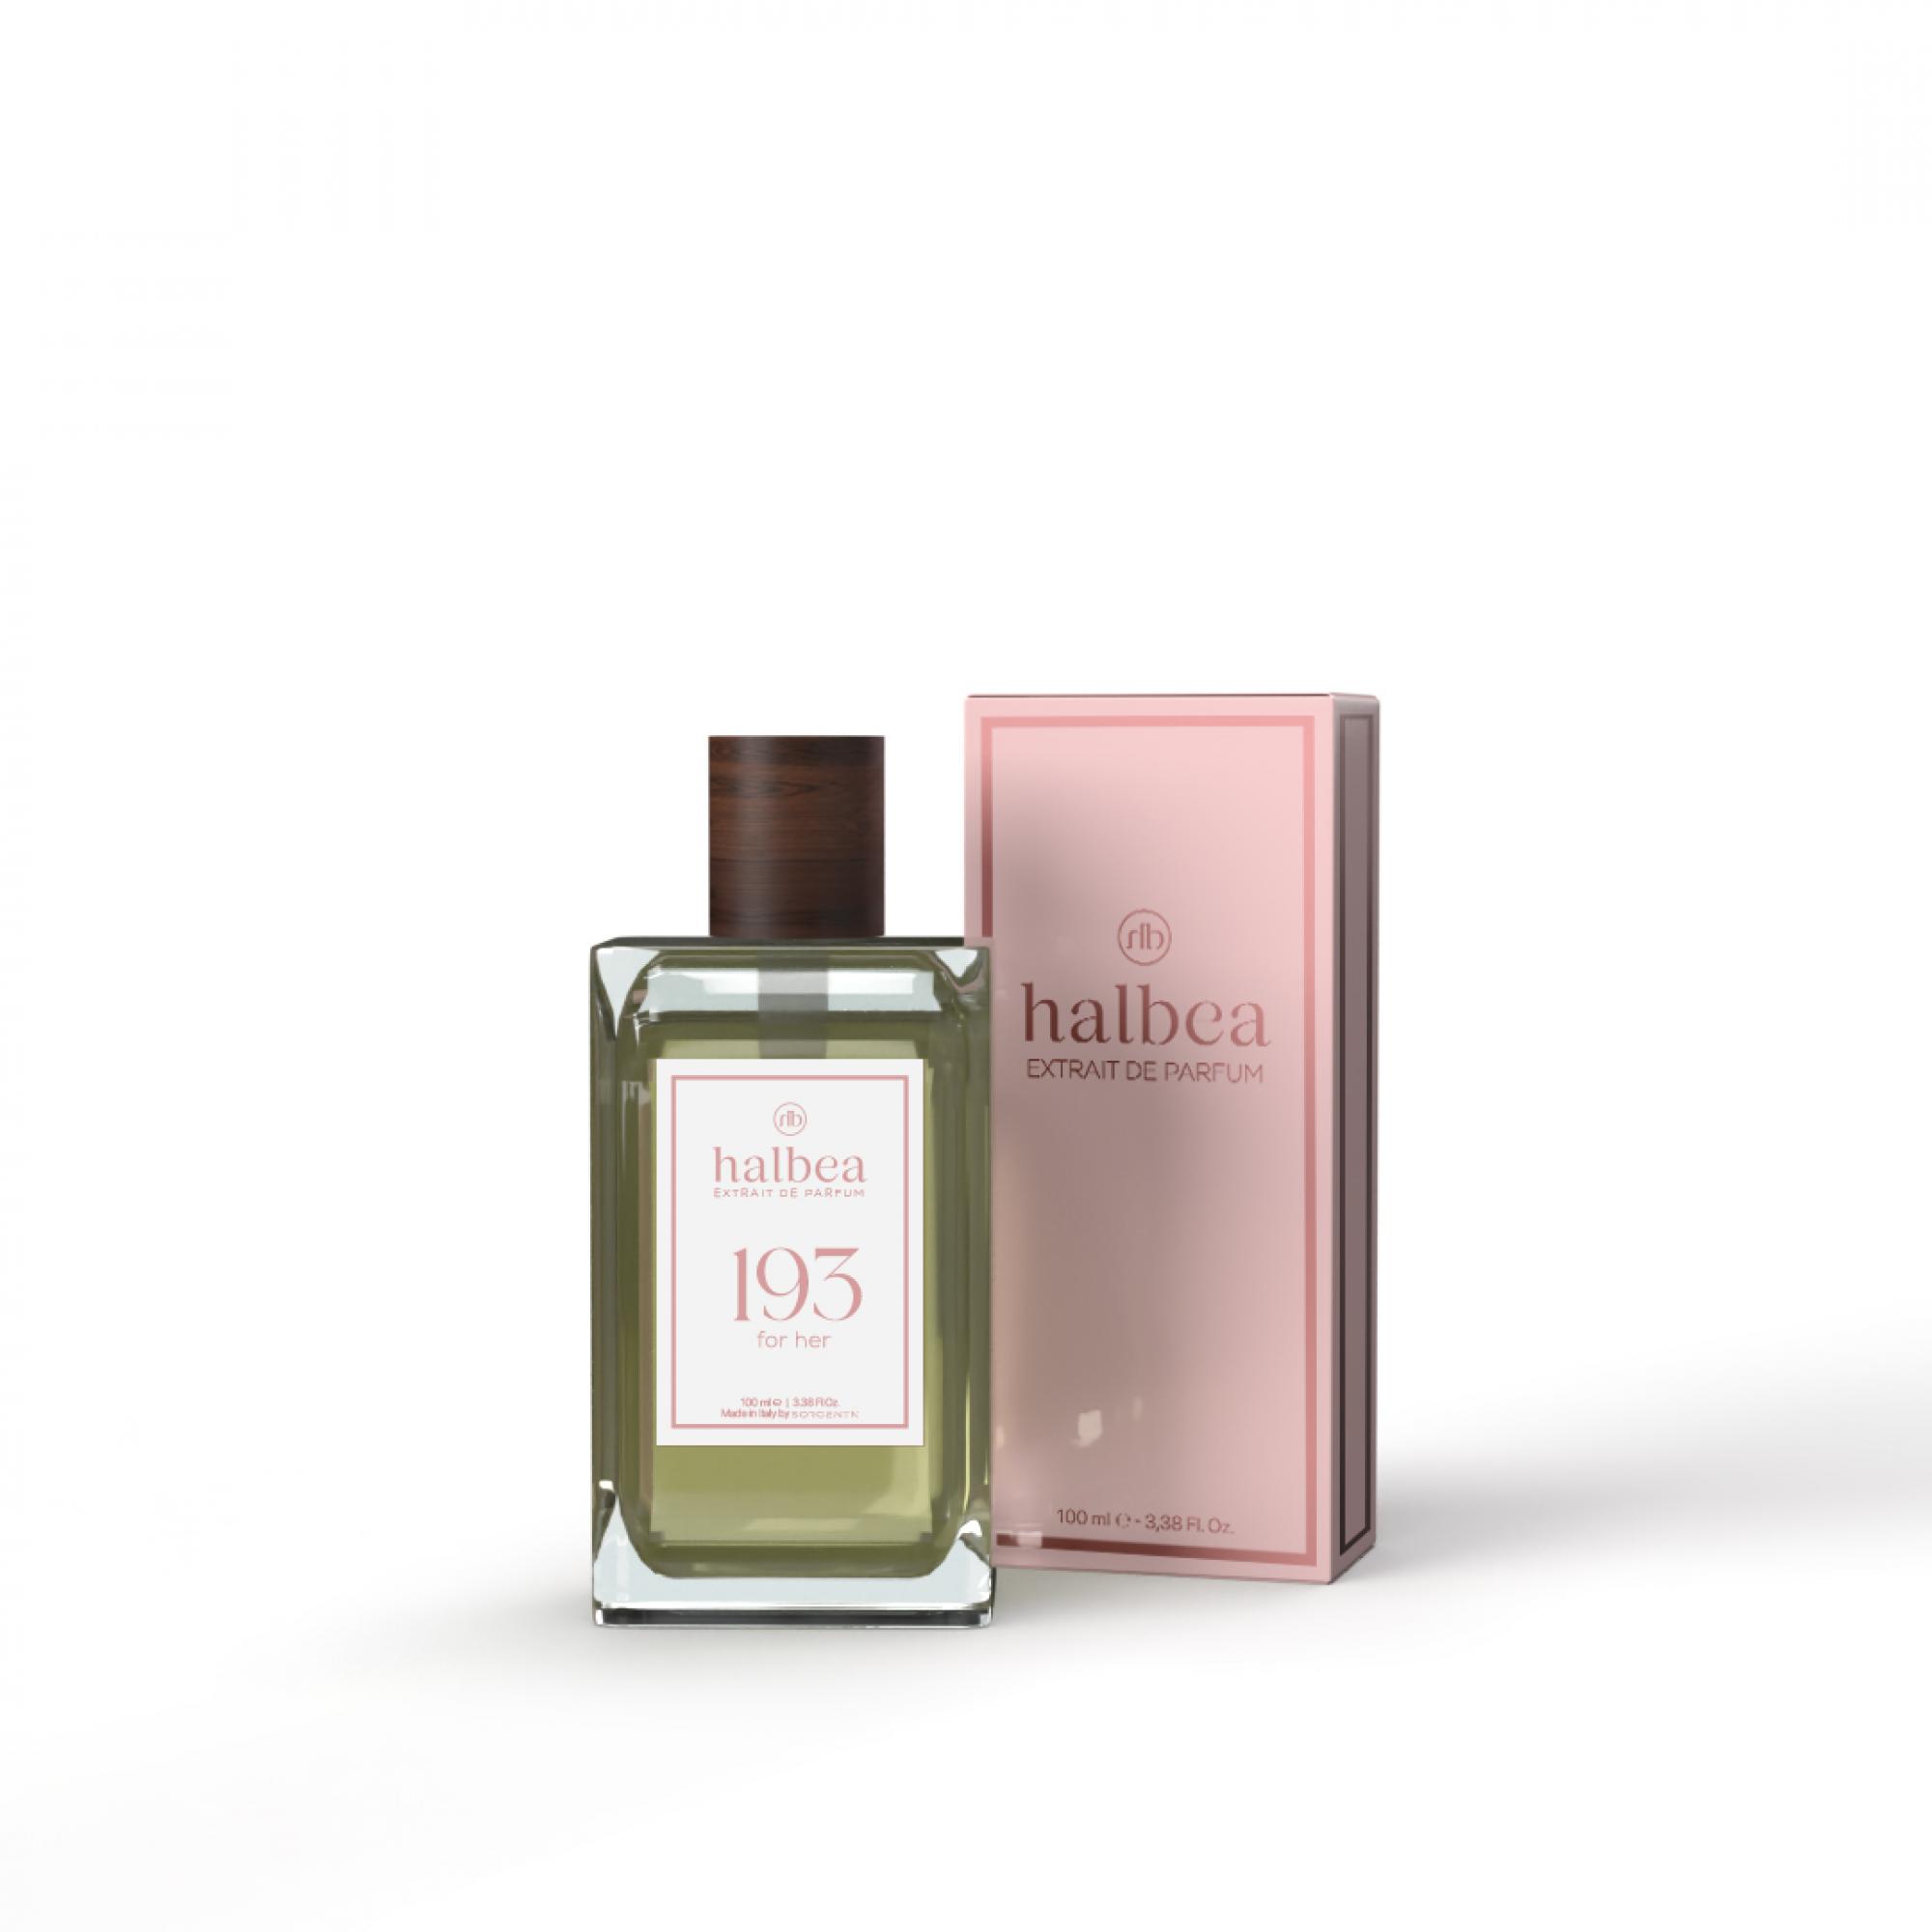 Halbea Parfum Nr. 193 insp. by Dior Poison Girl Sorgenta 100ml